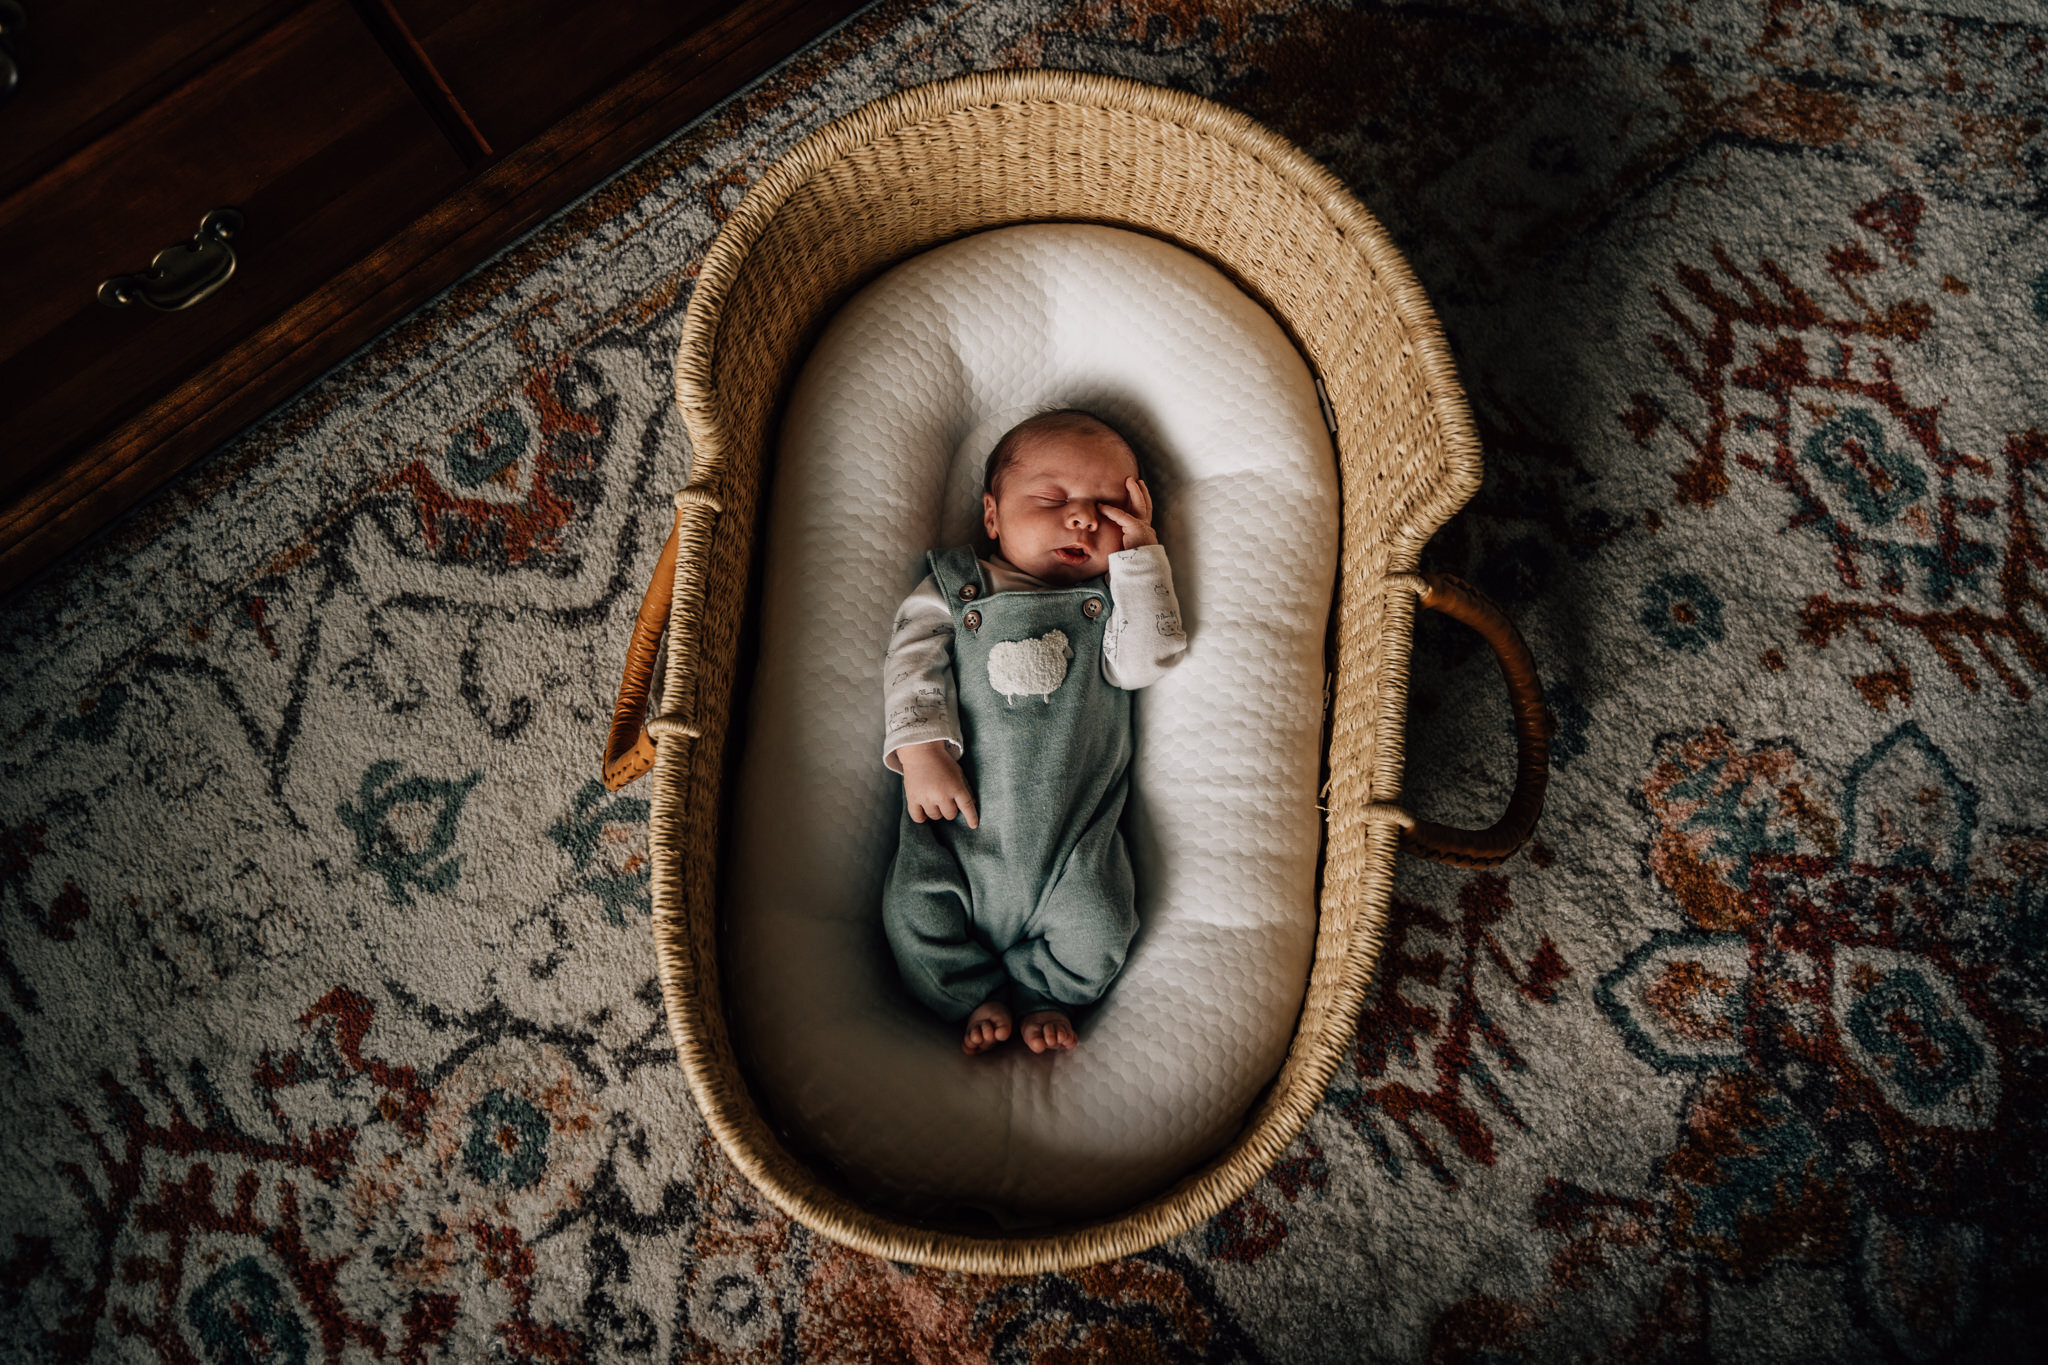 Dana-Jacobs-Photography-Finnegan-newborn-photography-session-st-louis-Web-no-watermark30-1563.JPG